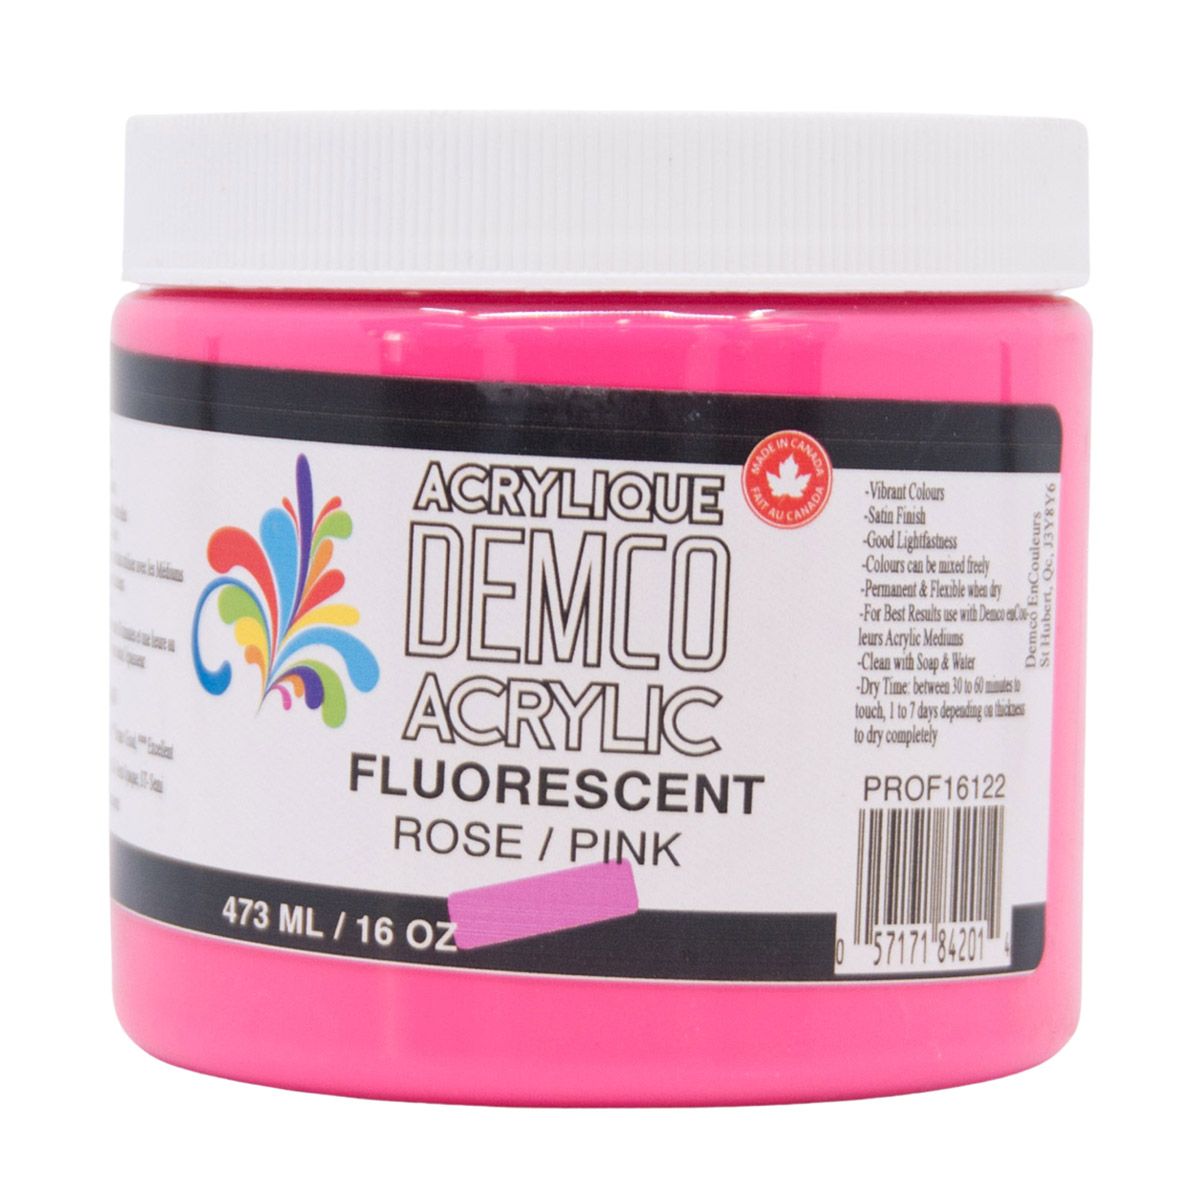 Demco Acrylic Fluorescent Pink 473ml/16oz